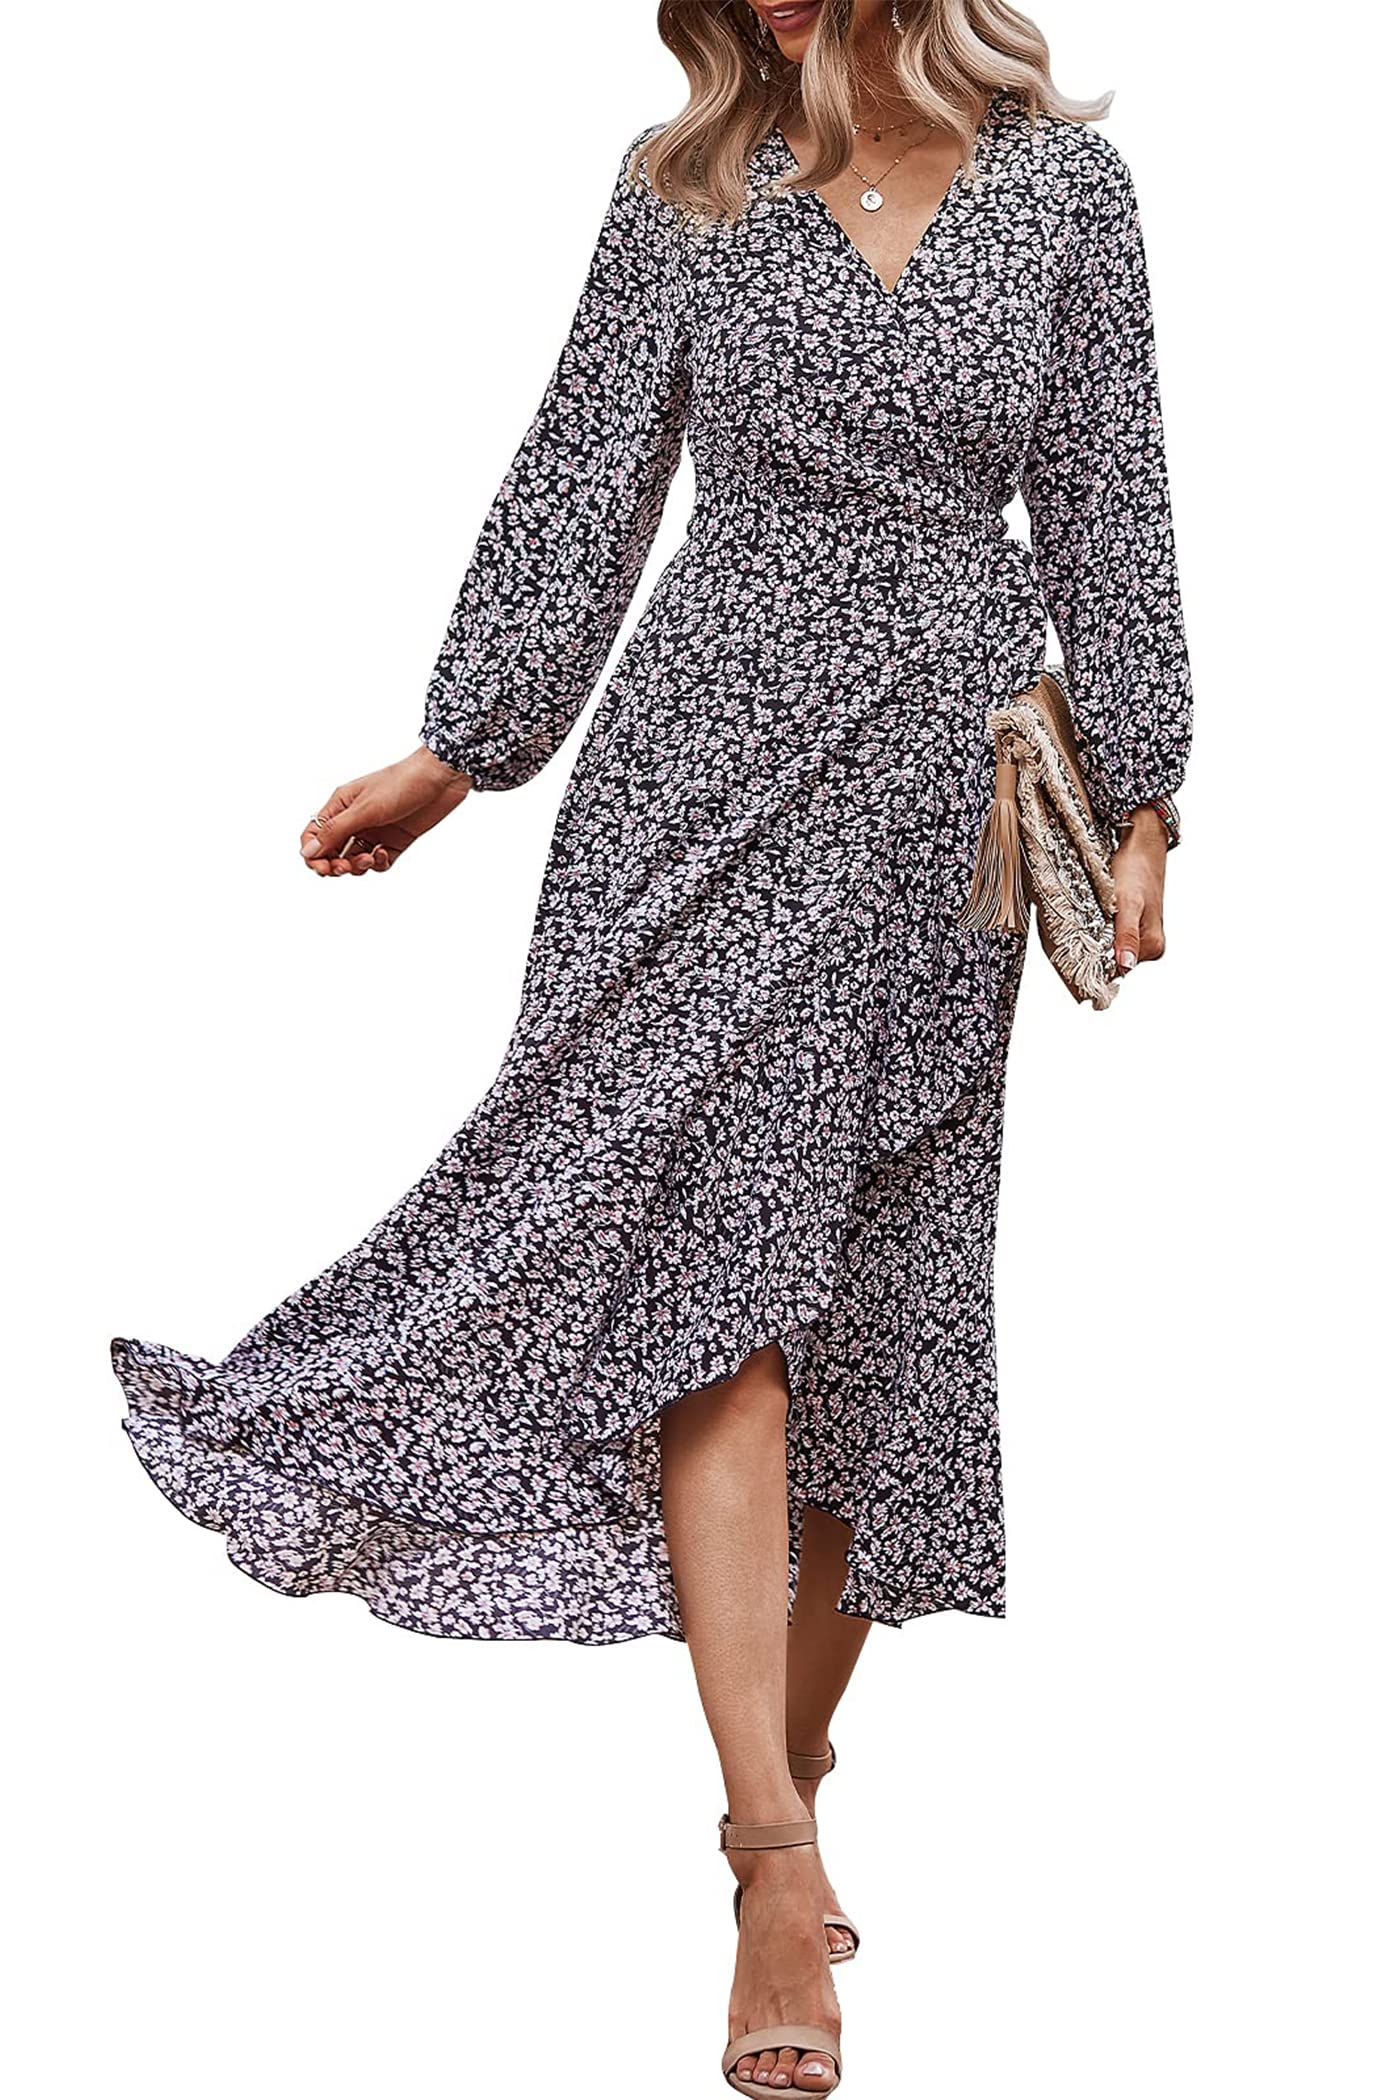 PRETTYGARDEN Women's Long Sleeve Vintage Wrap Dress Floral Print V-Neck Maxi Dresses with Belt